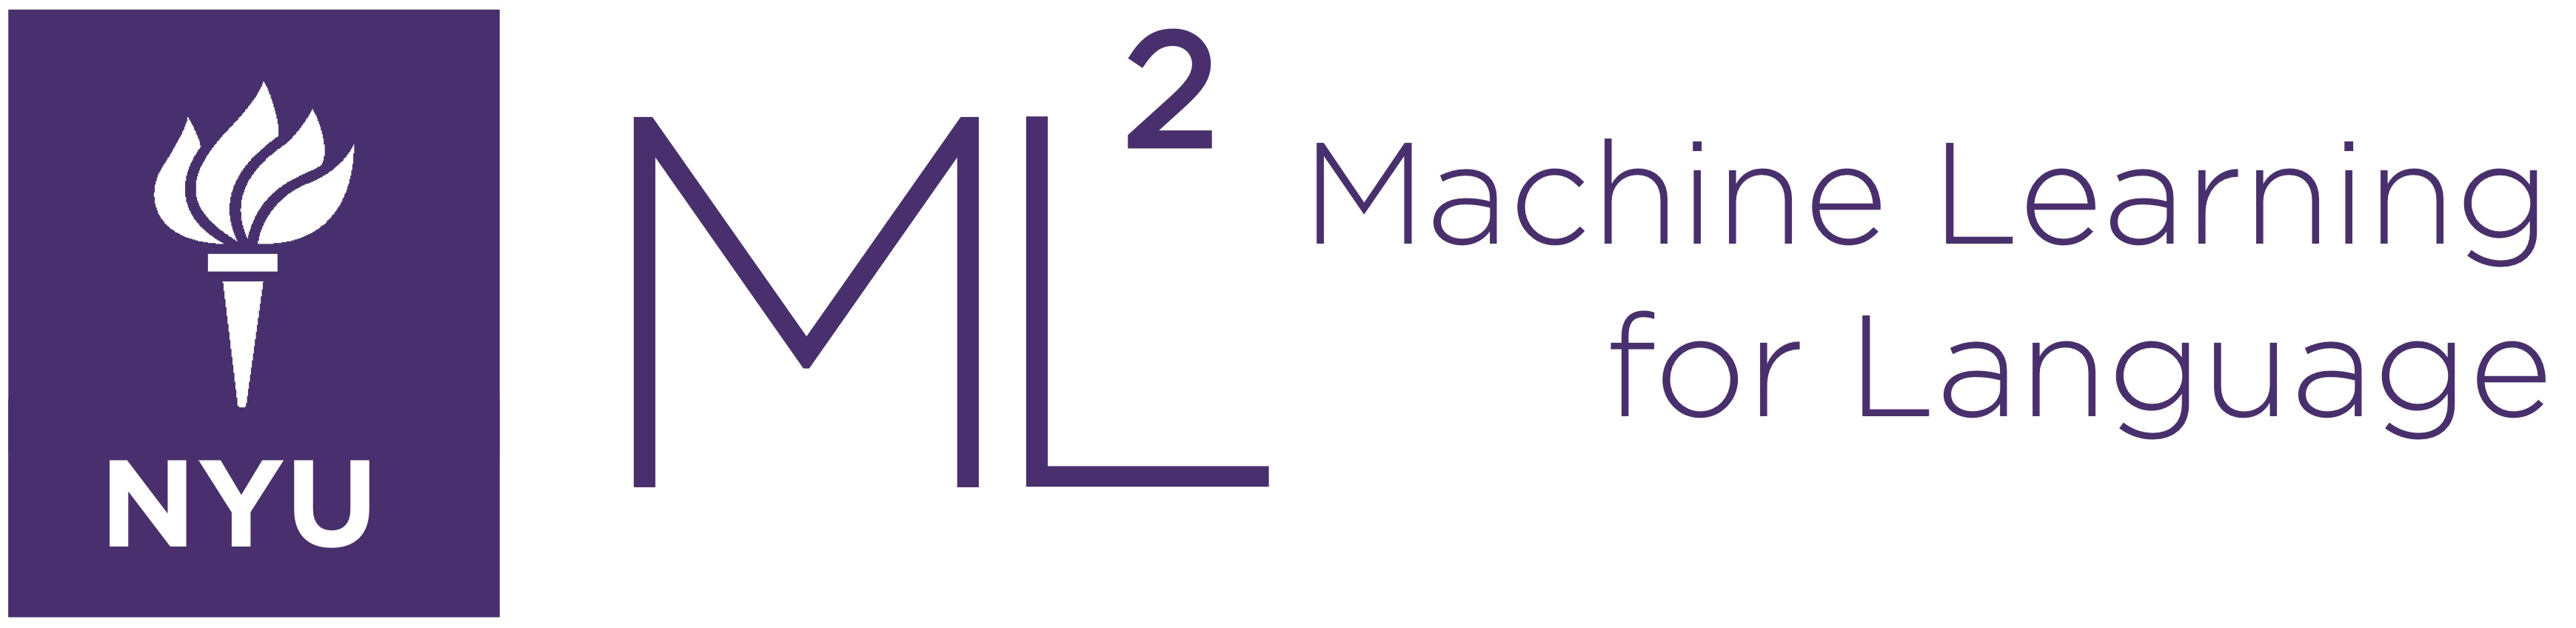 ml2 logo